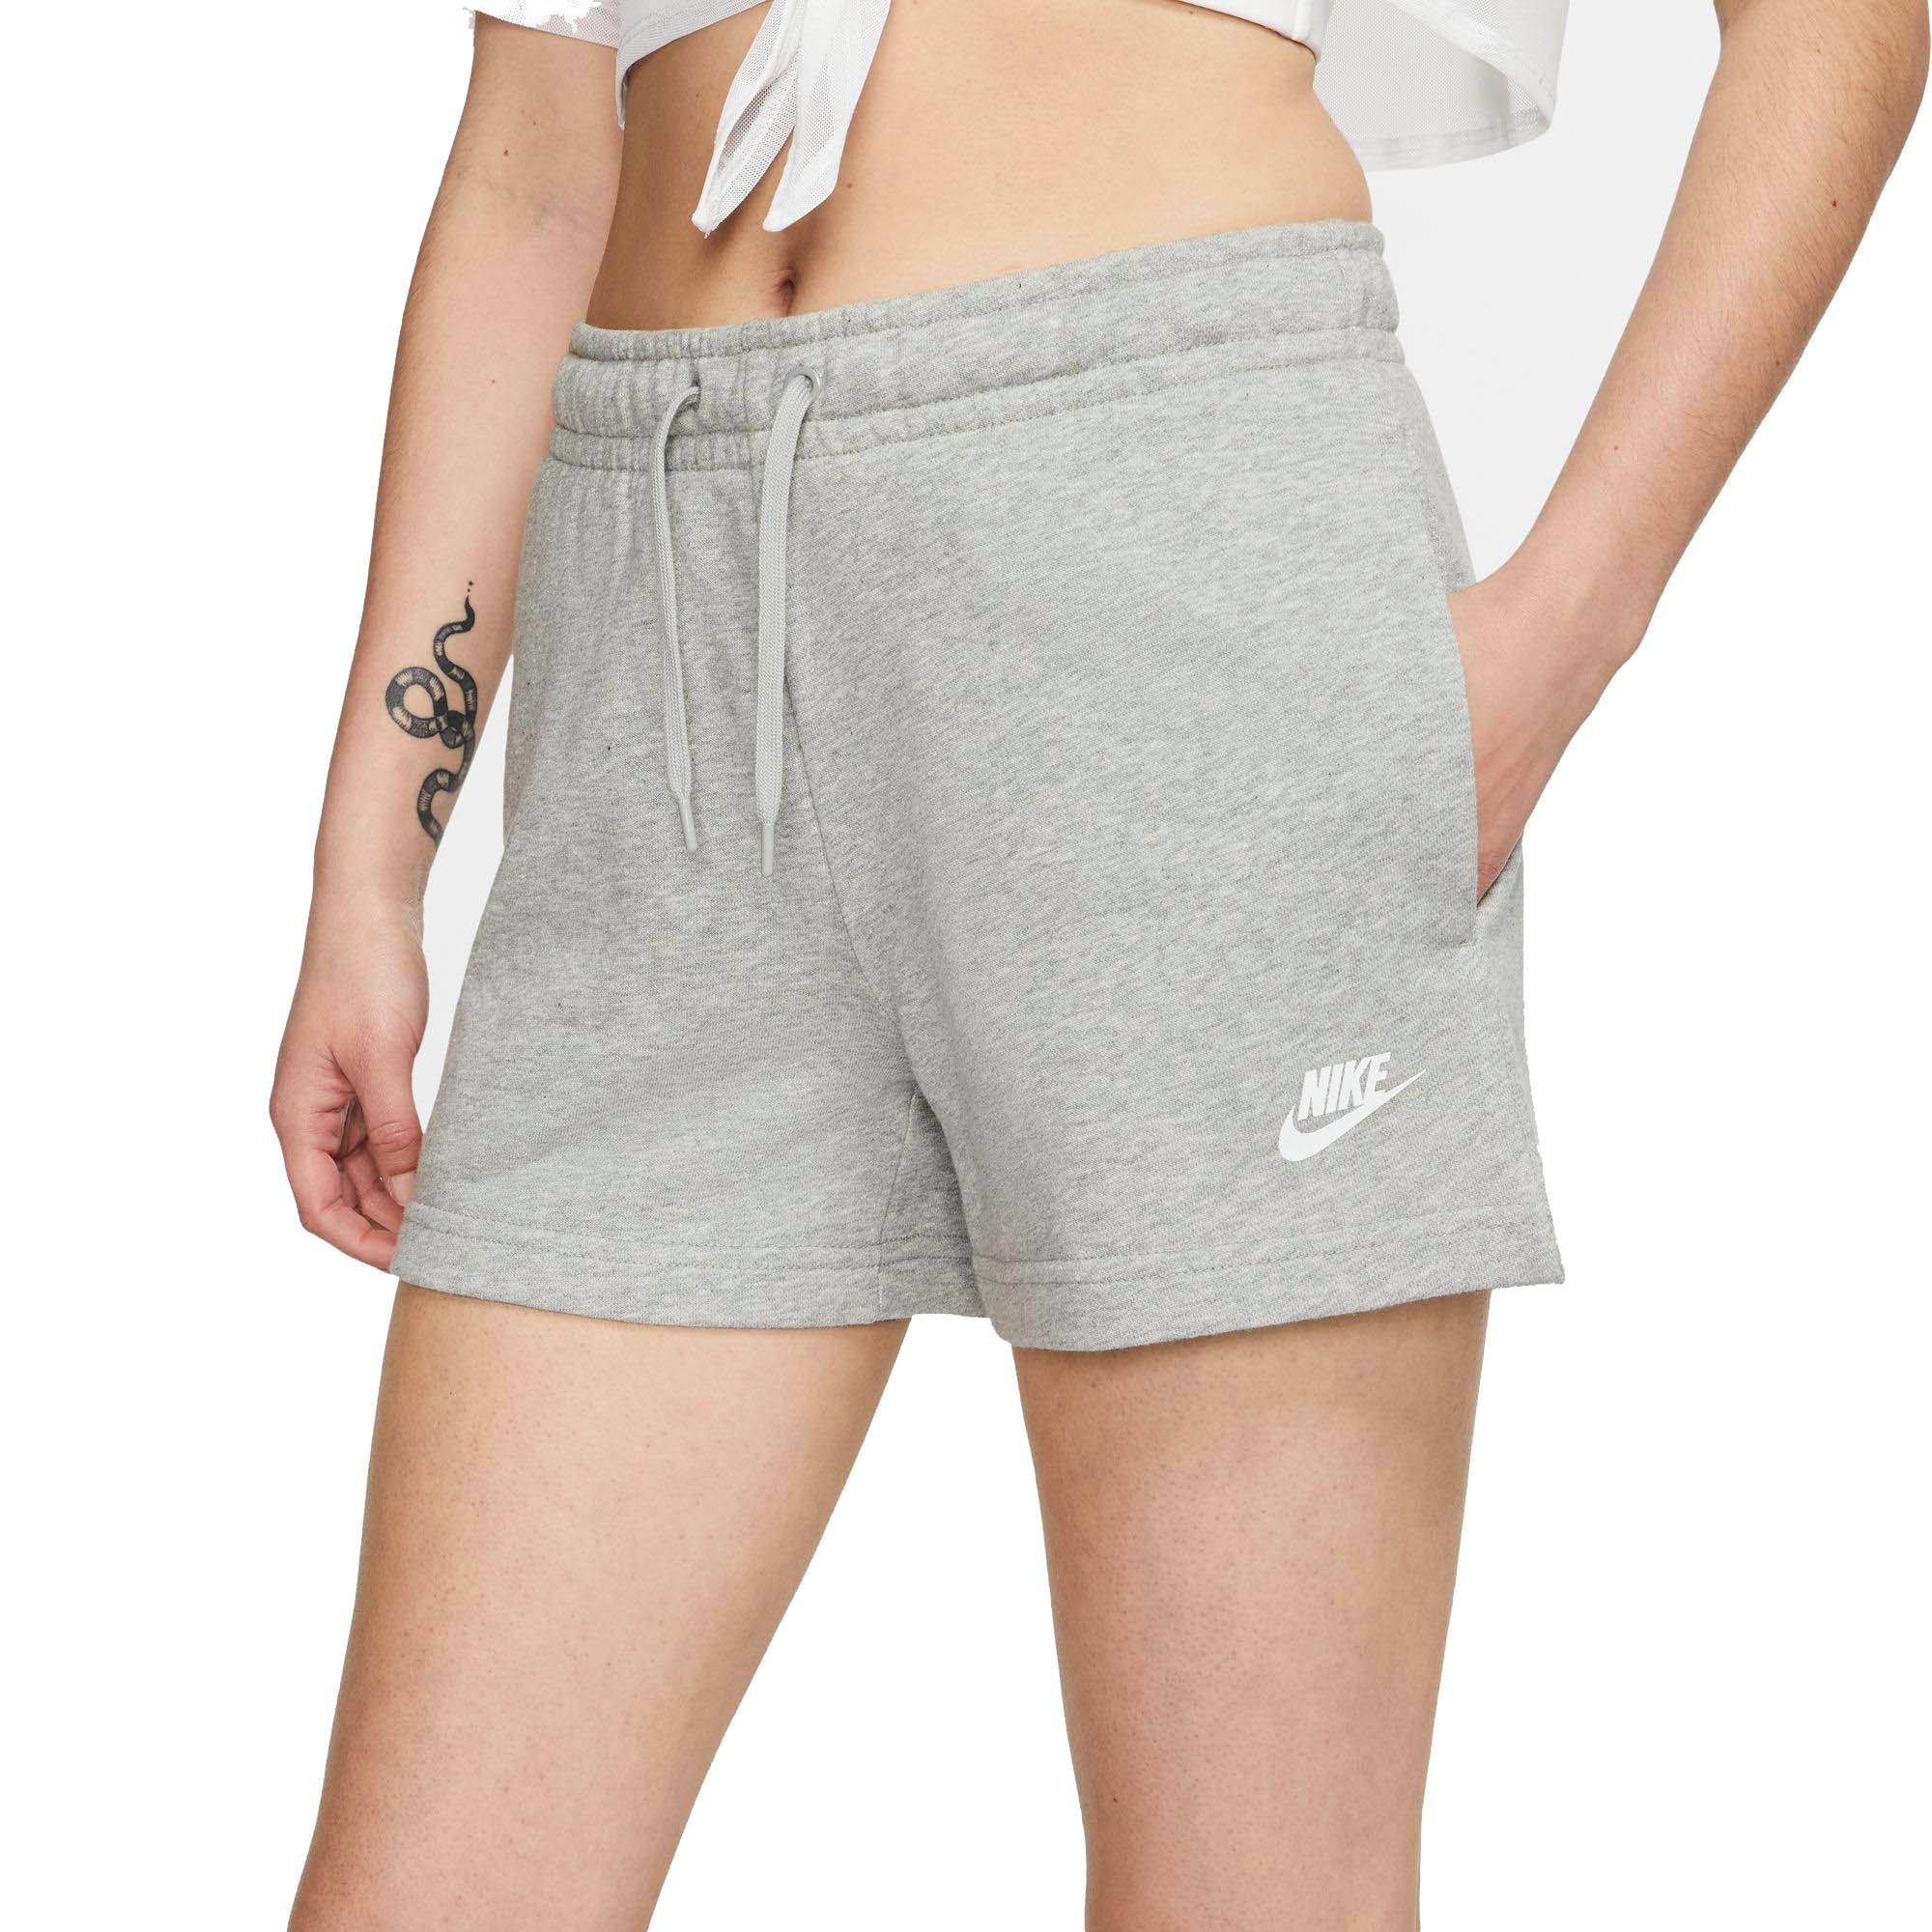 nike gray shorts womens